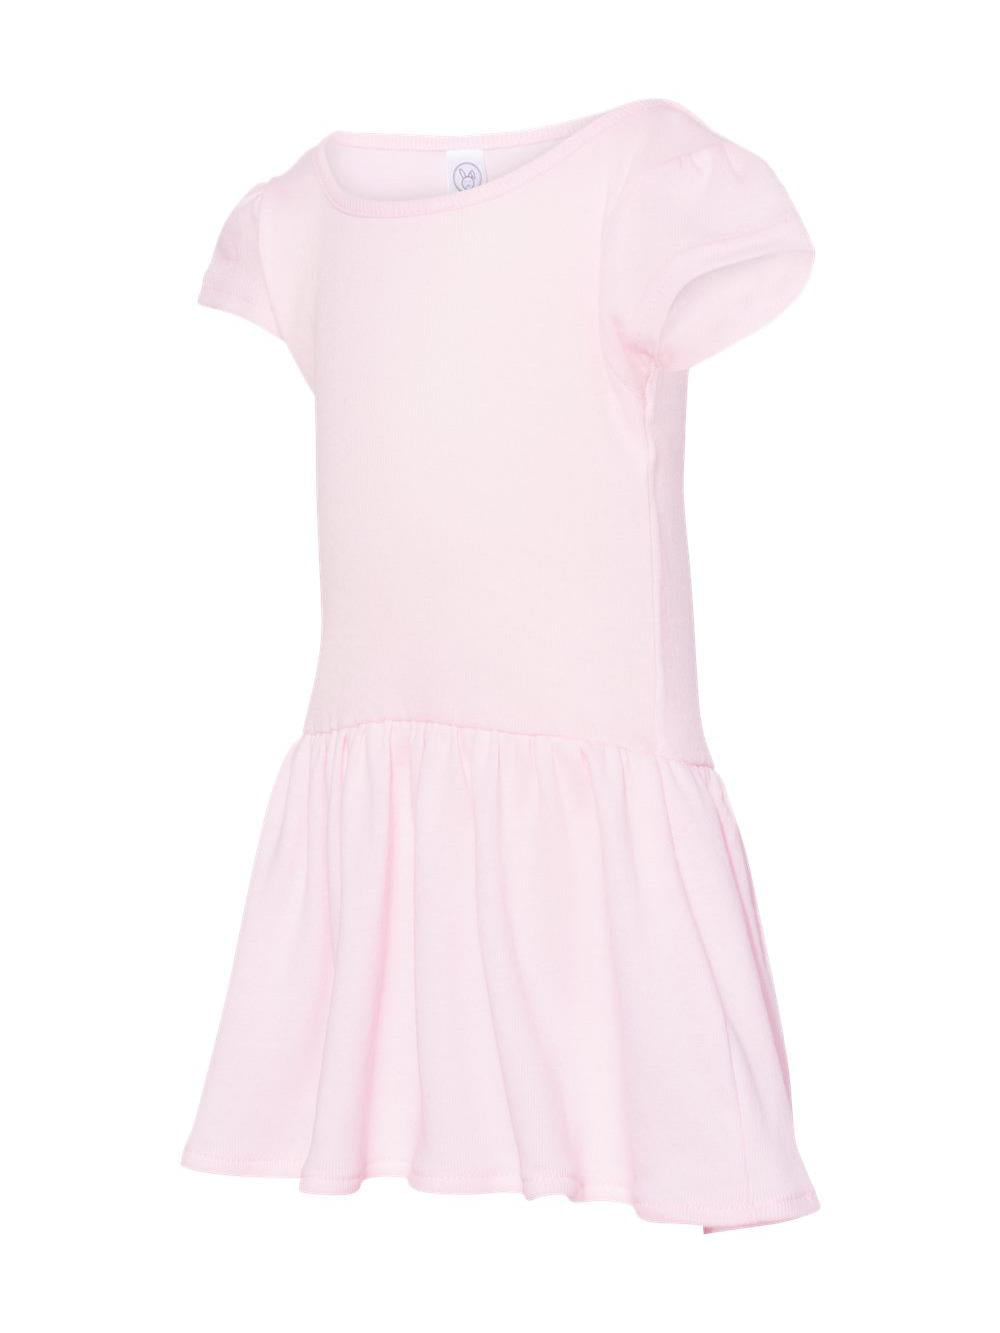 Rabbit Skins - Infant Baby Rib Dress - 5320 - Walmart.com